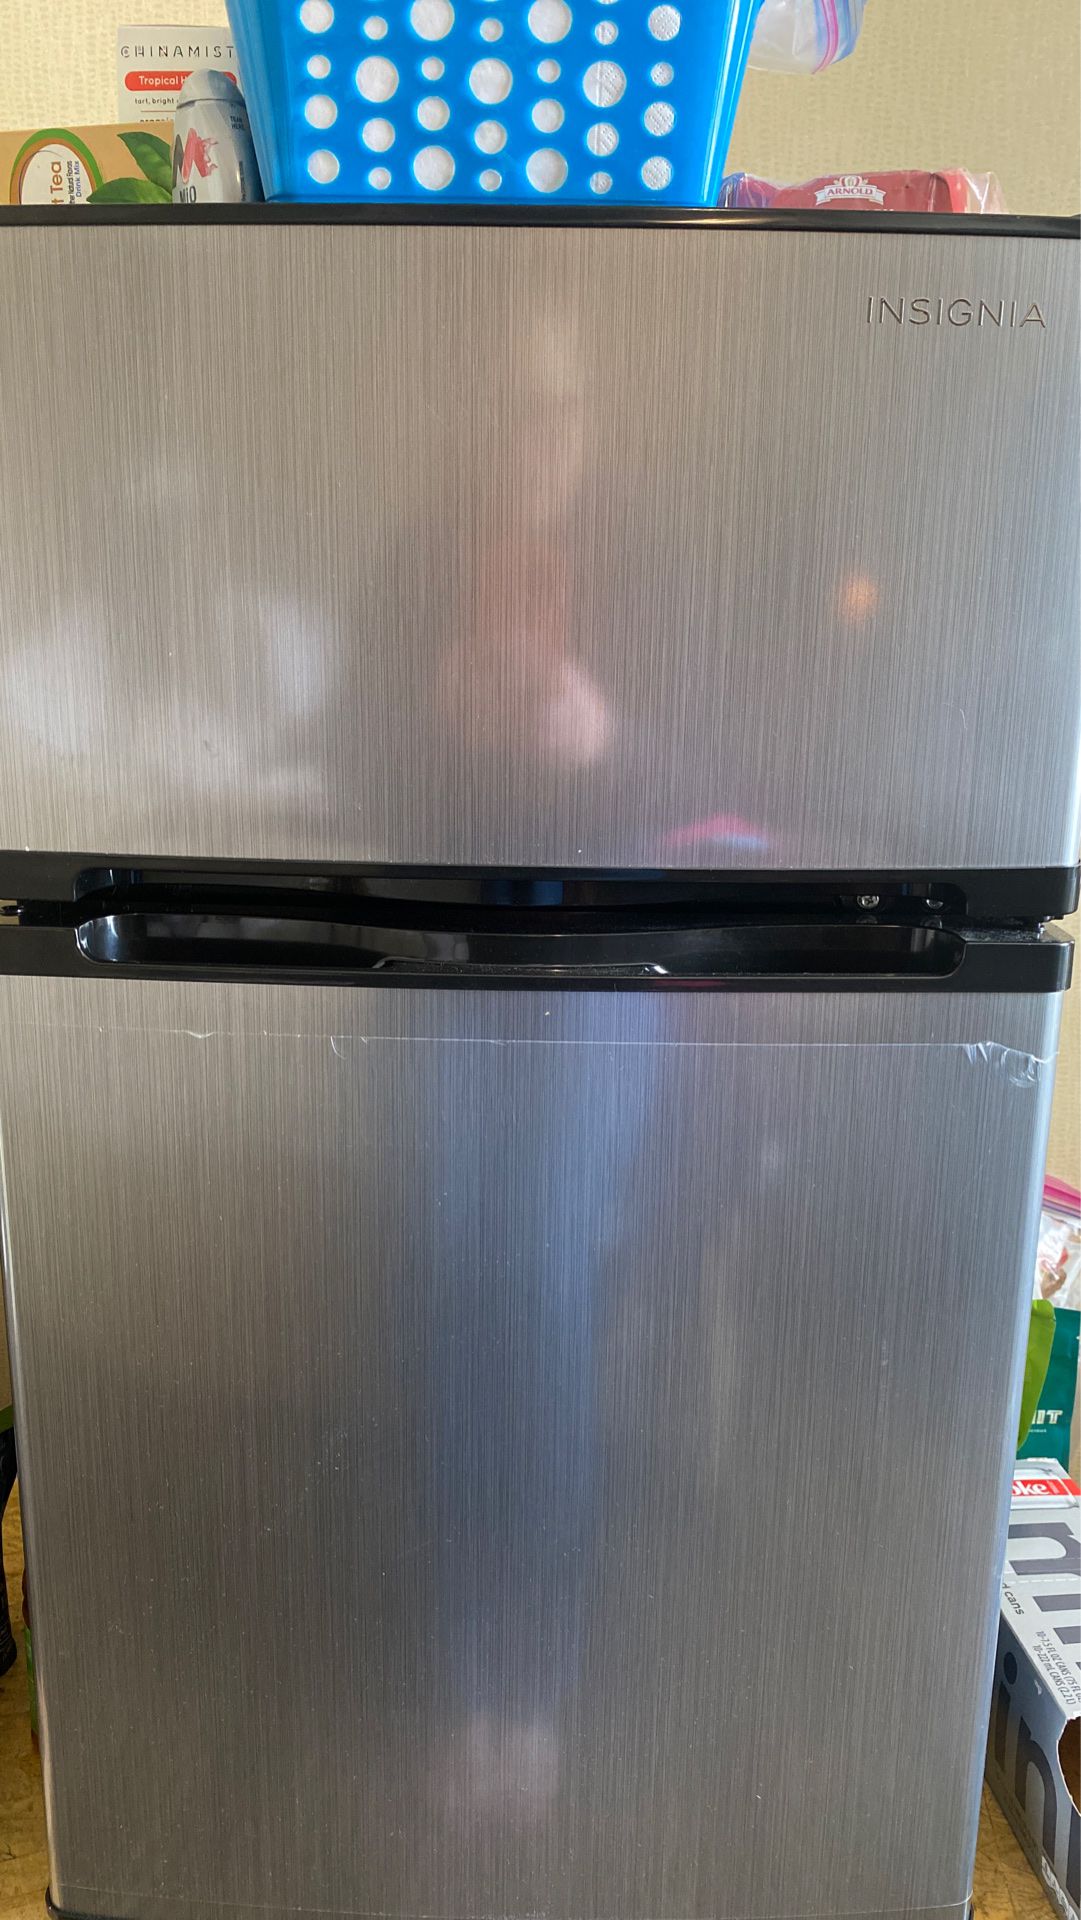 Mini Insignia freezer/refrigerator